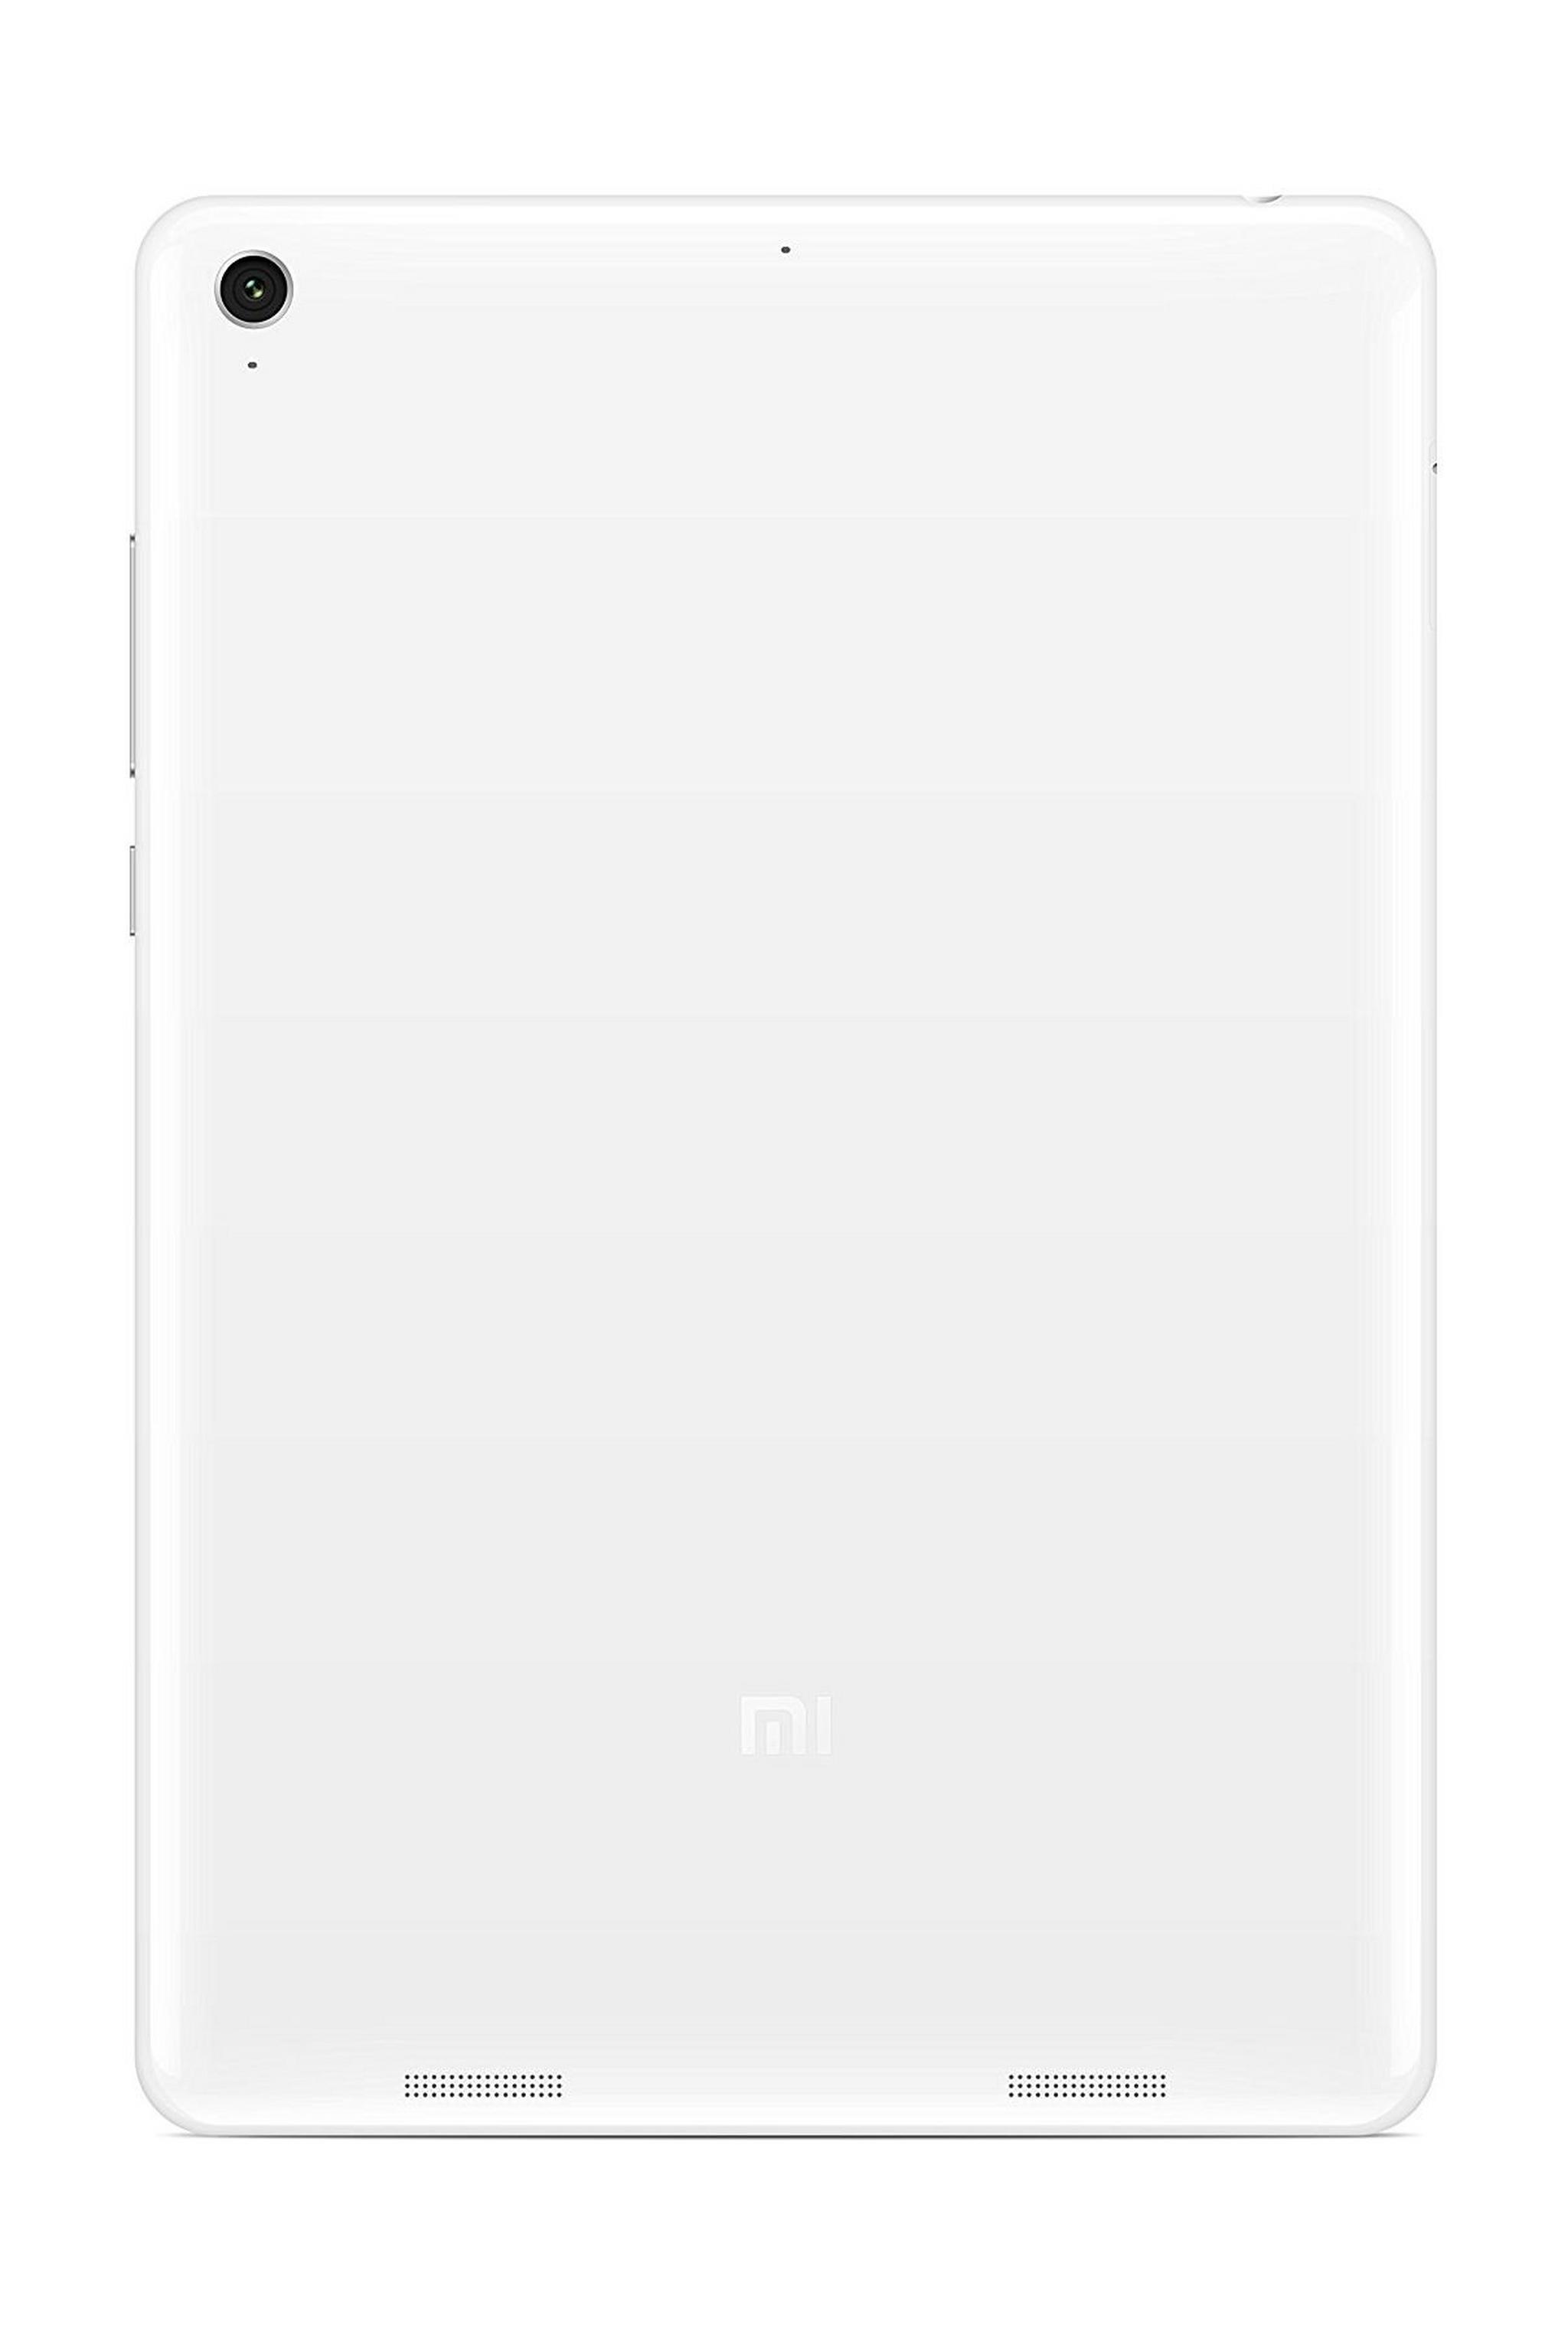 Mi Pad 16GB 8MP WiFi 7.9-inch Tablet – White